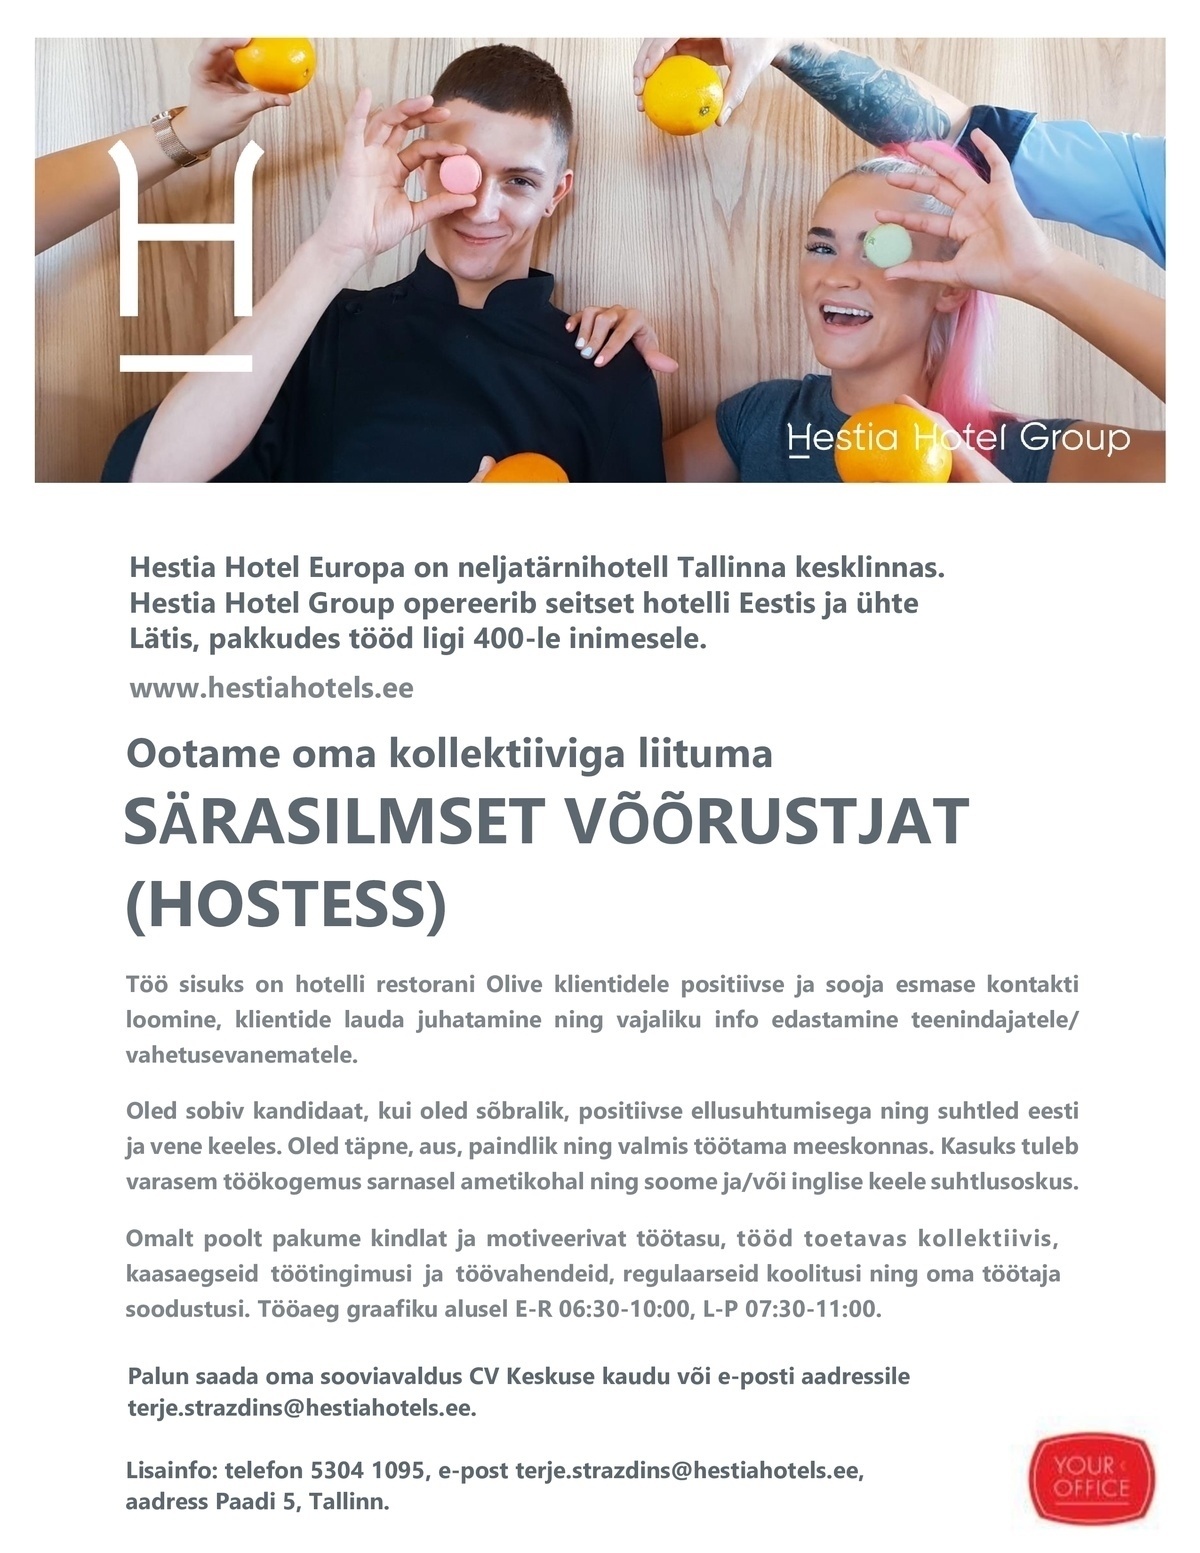 Hestia Hotel Europa Hostess (Hestia Hotel Europa) Tööaeg 06:30-10:00